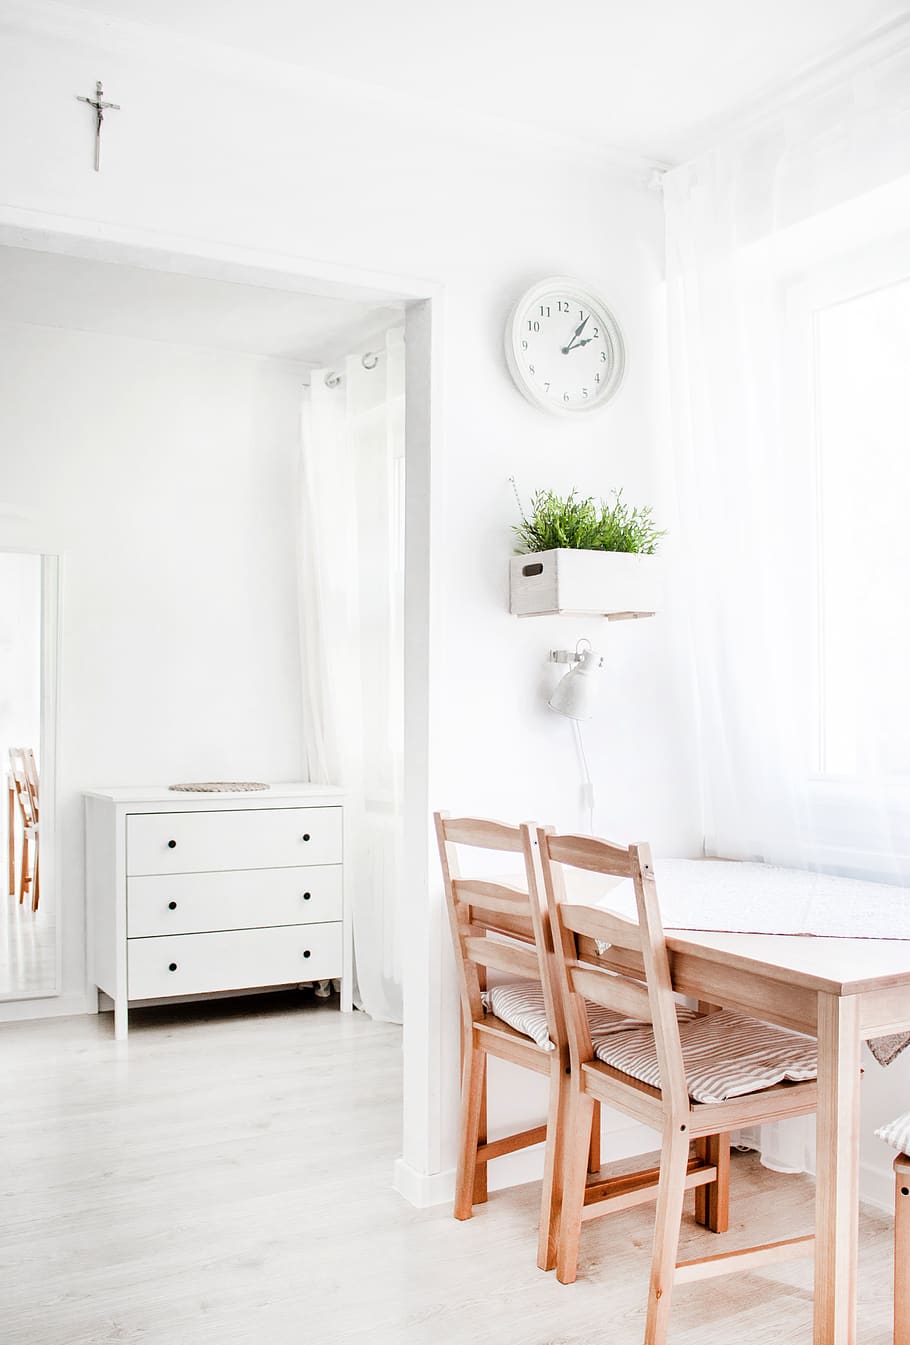 office, minimal, white, chair, desk, clock, drawers, plant, window, seat